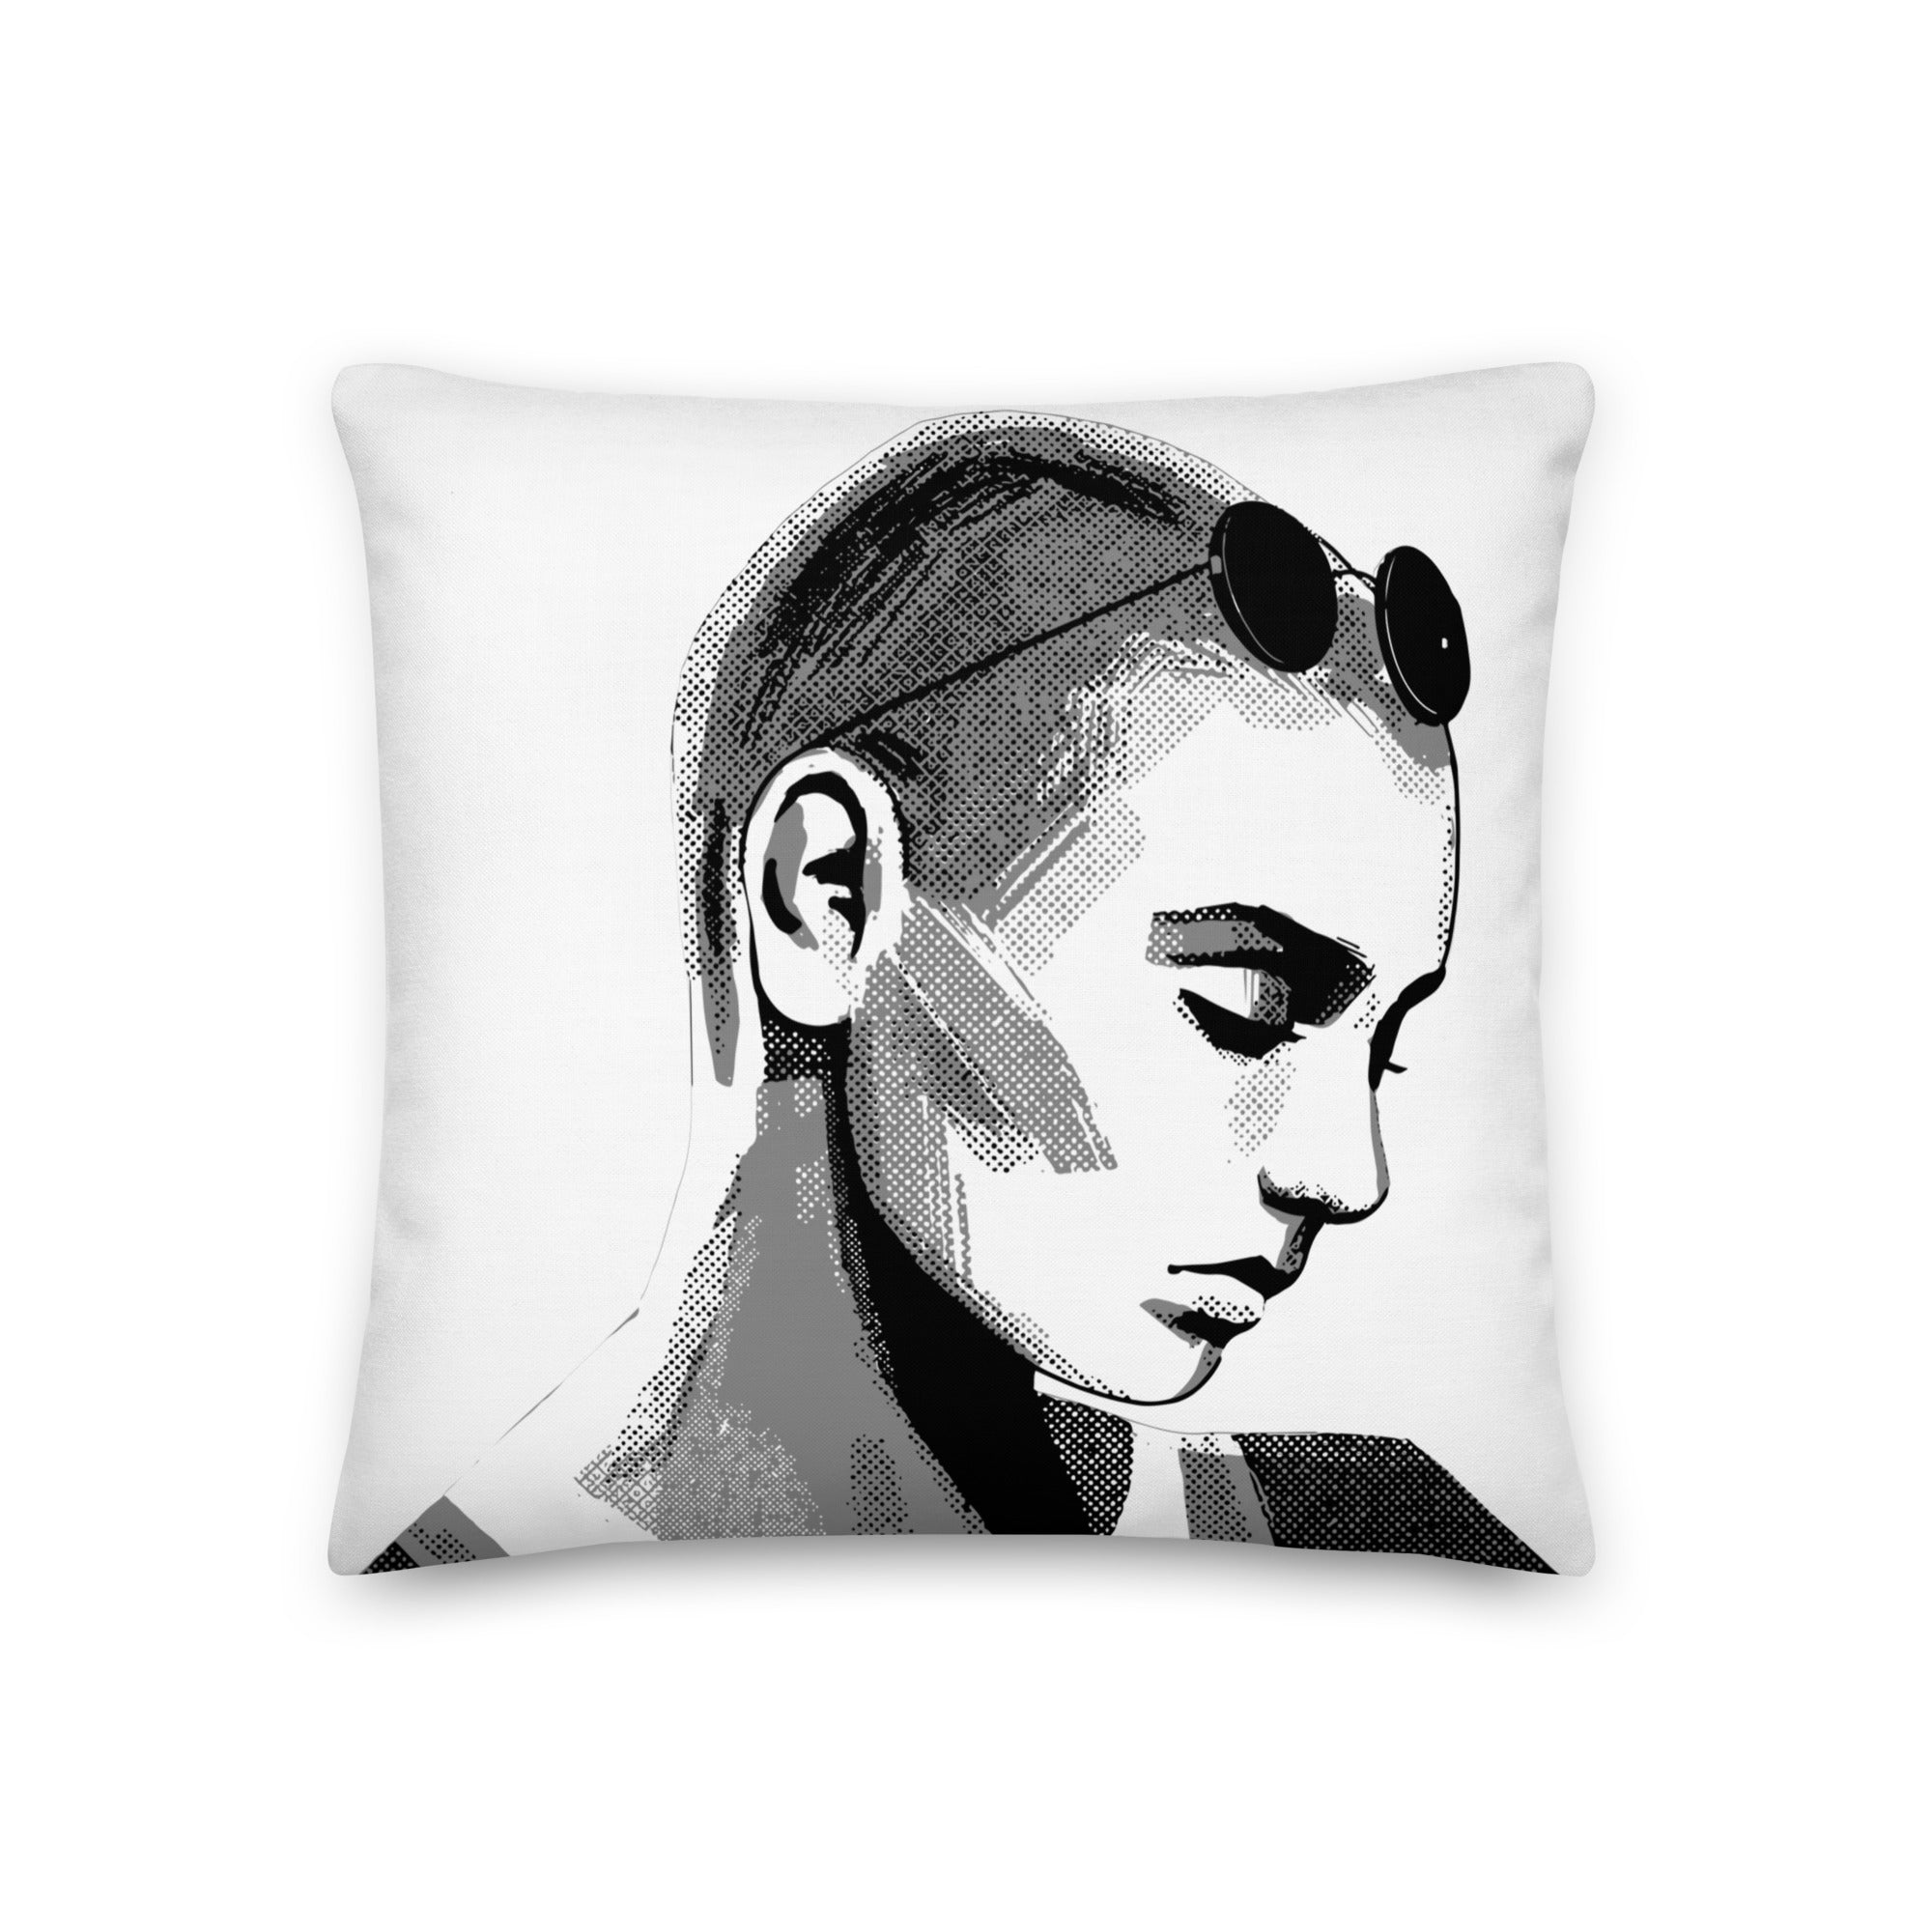 Sinead's Serenity Iconic Inspiration Cushion